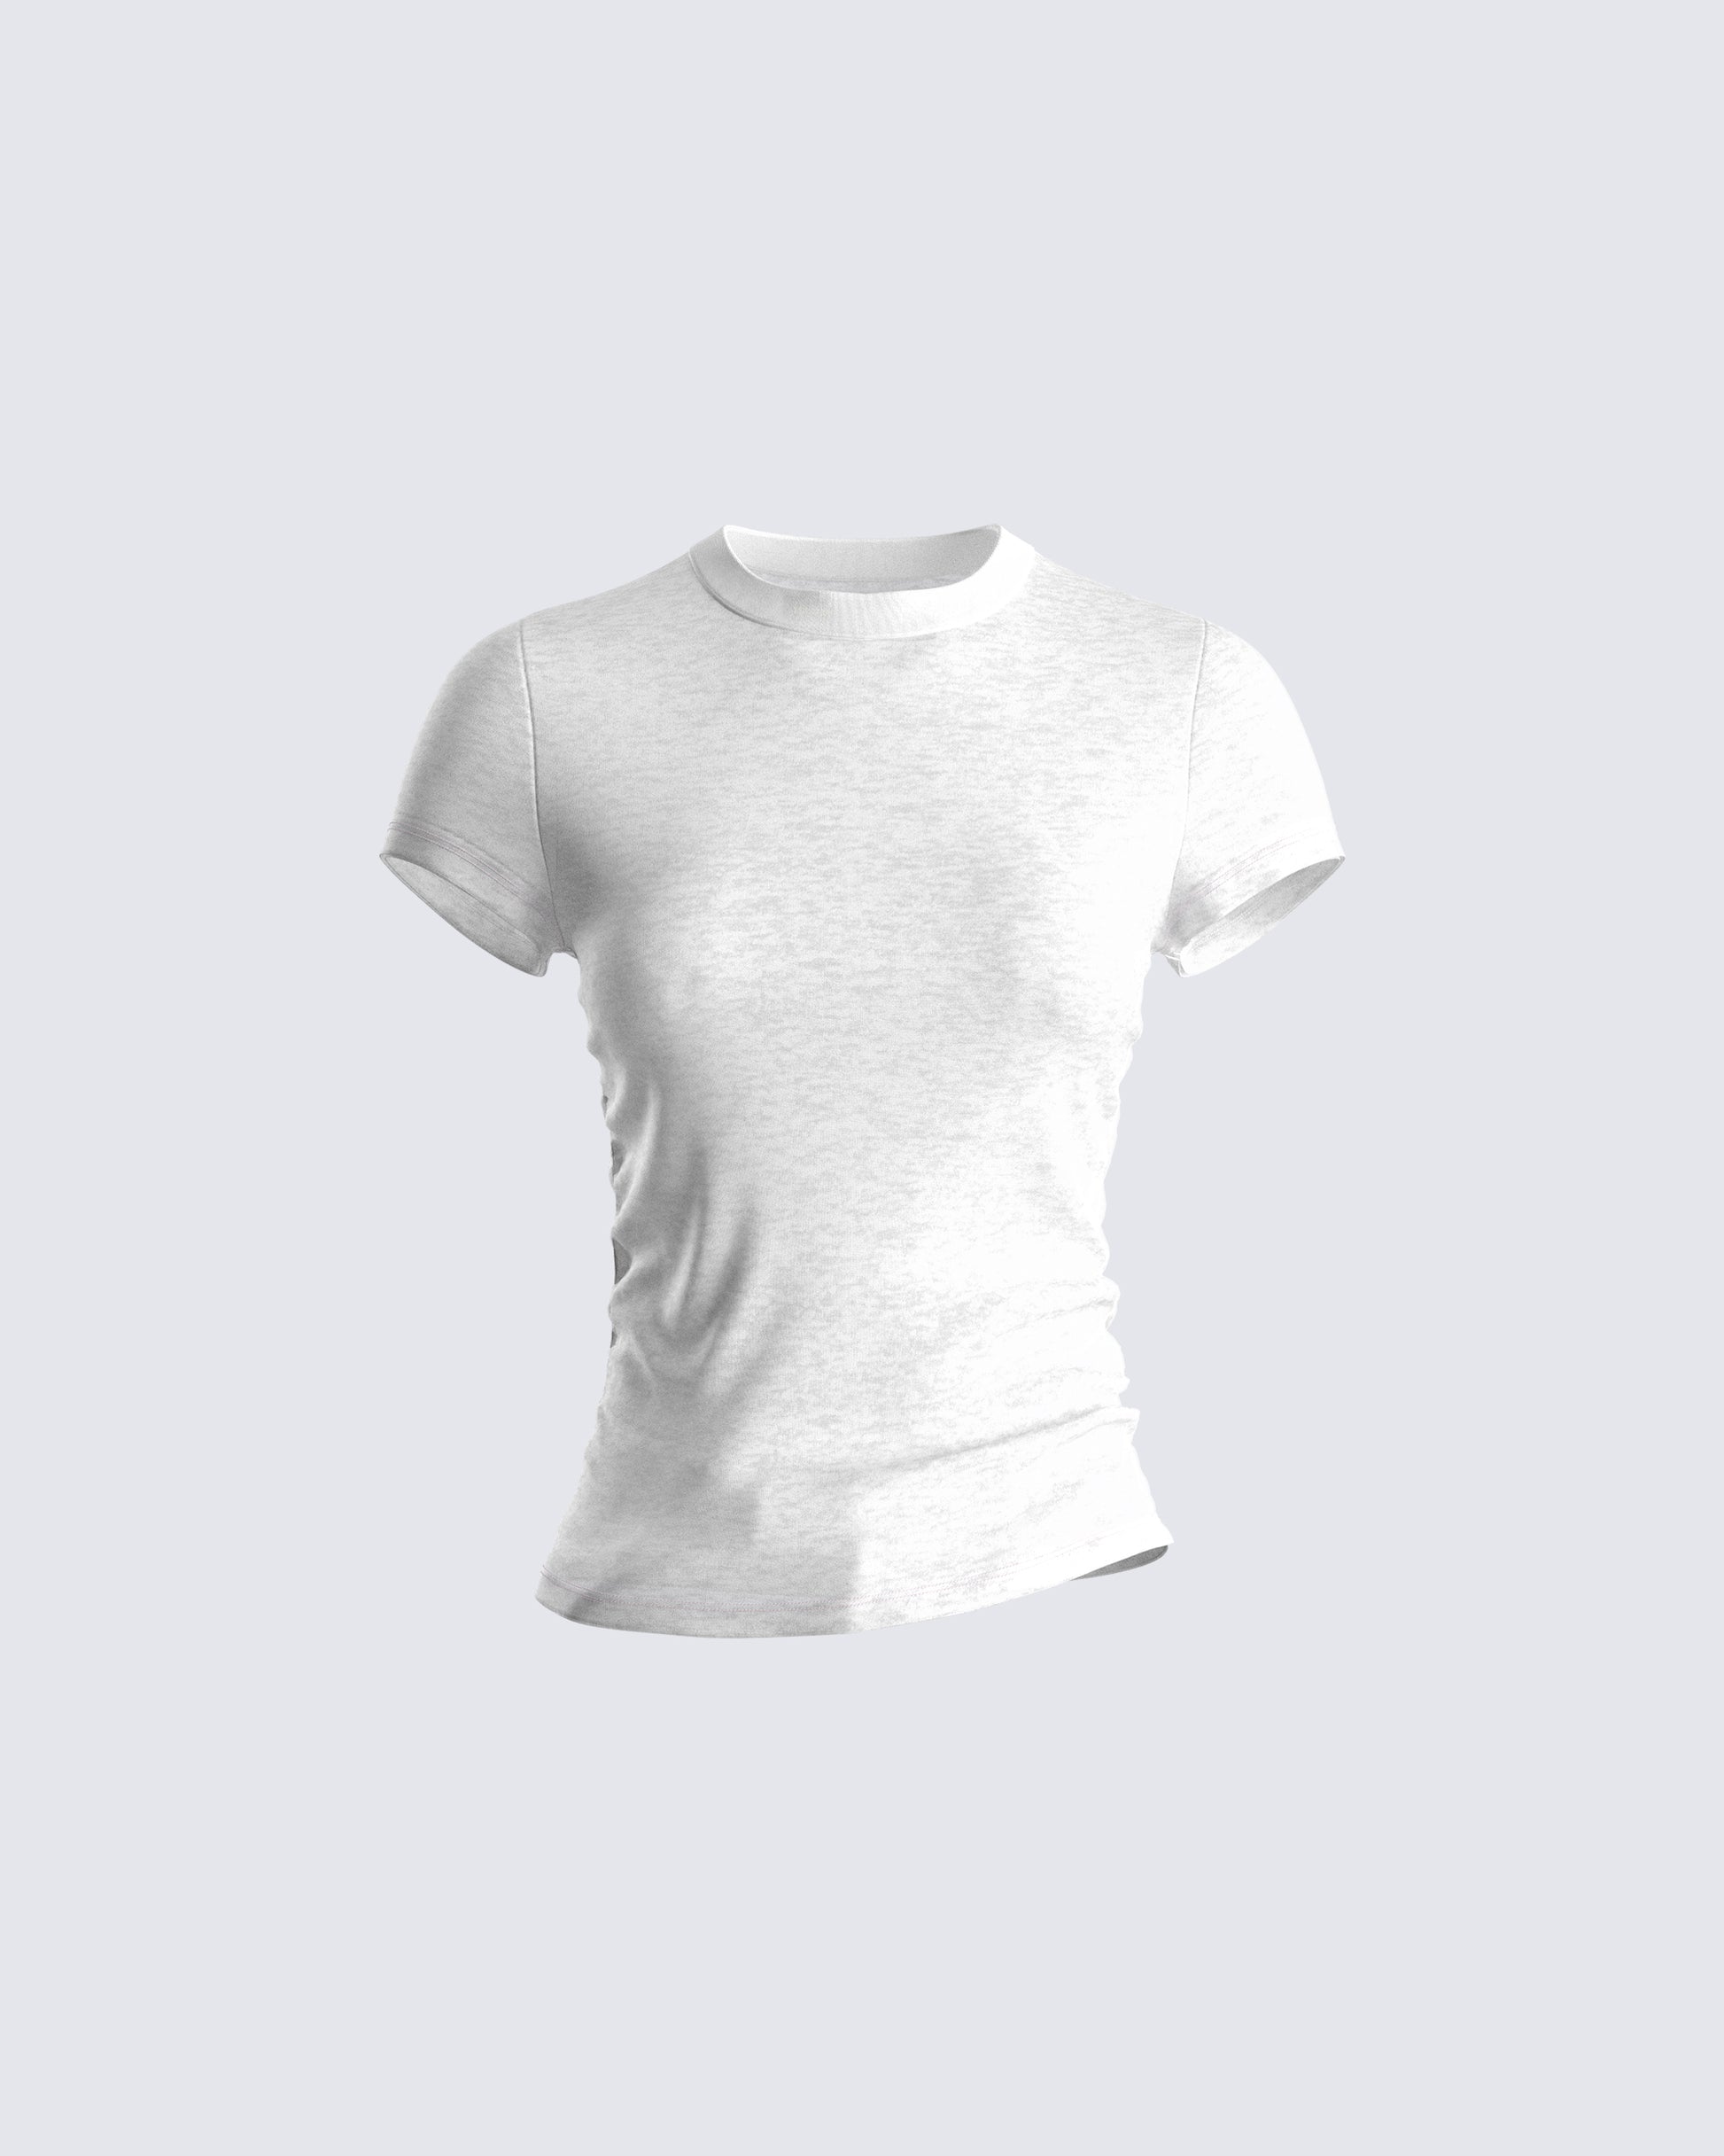 Asher White Slub Top – Shirt FINESSE T Knit